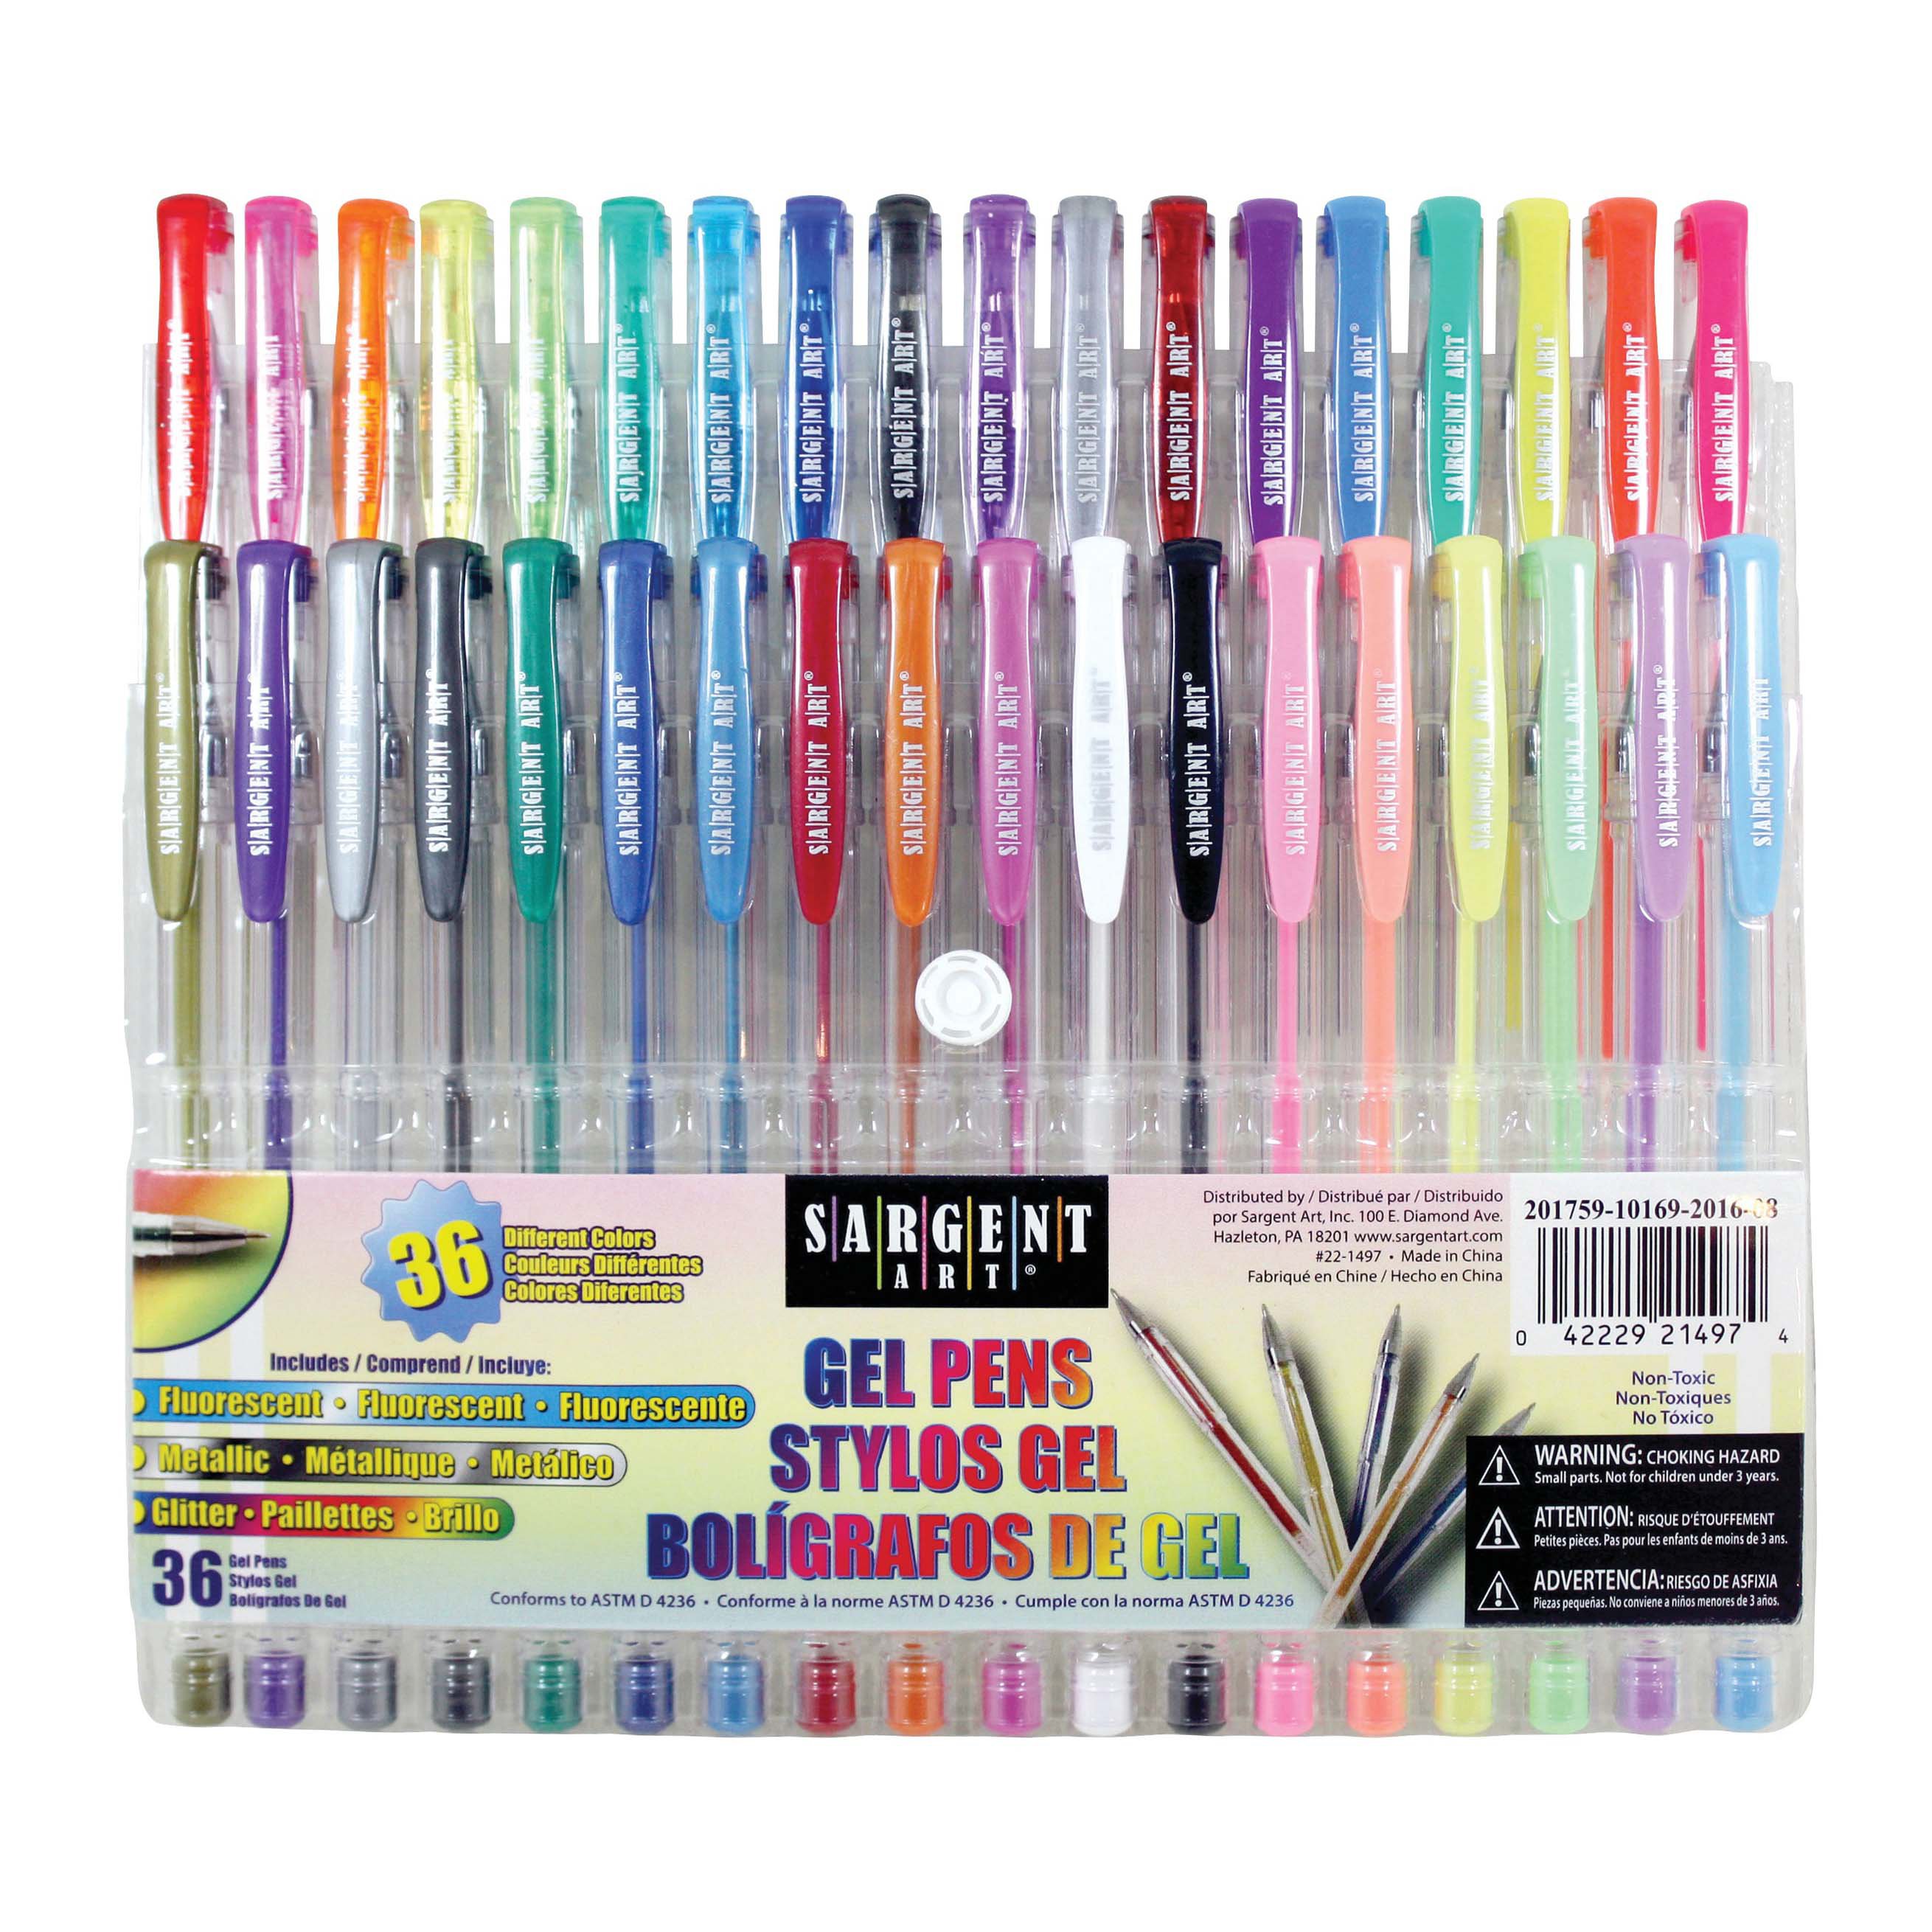 Crayola Erasable Colored Pencils - Shop Colored Pencils at H-E-B